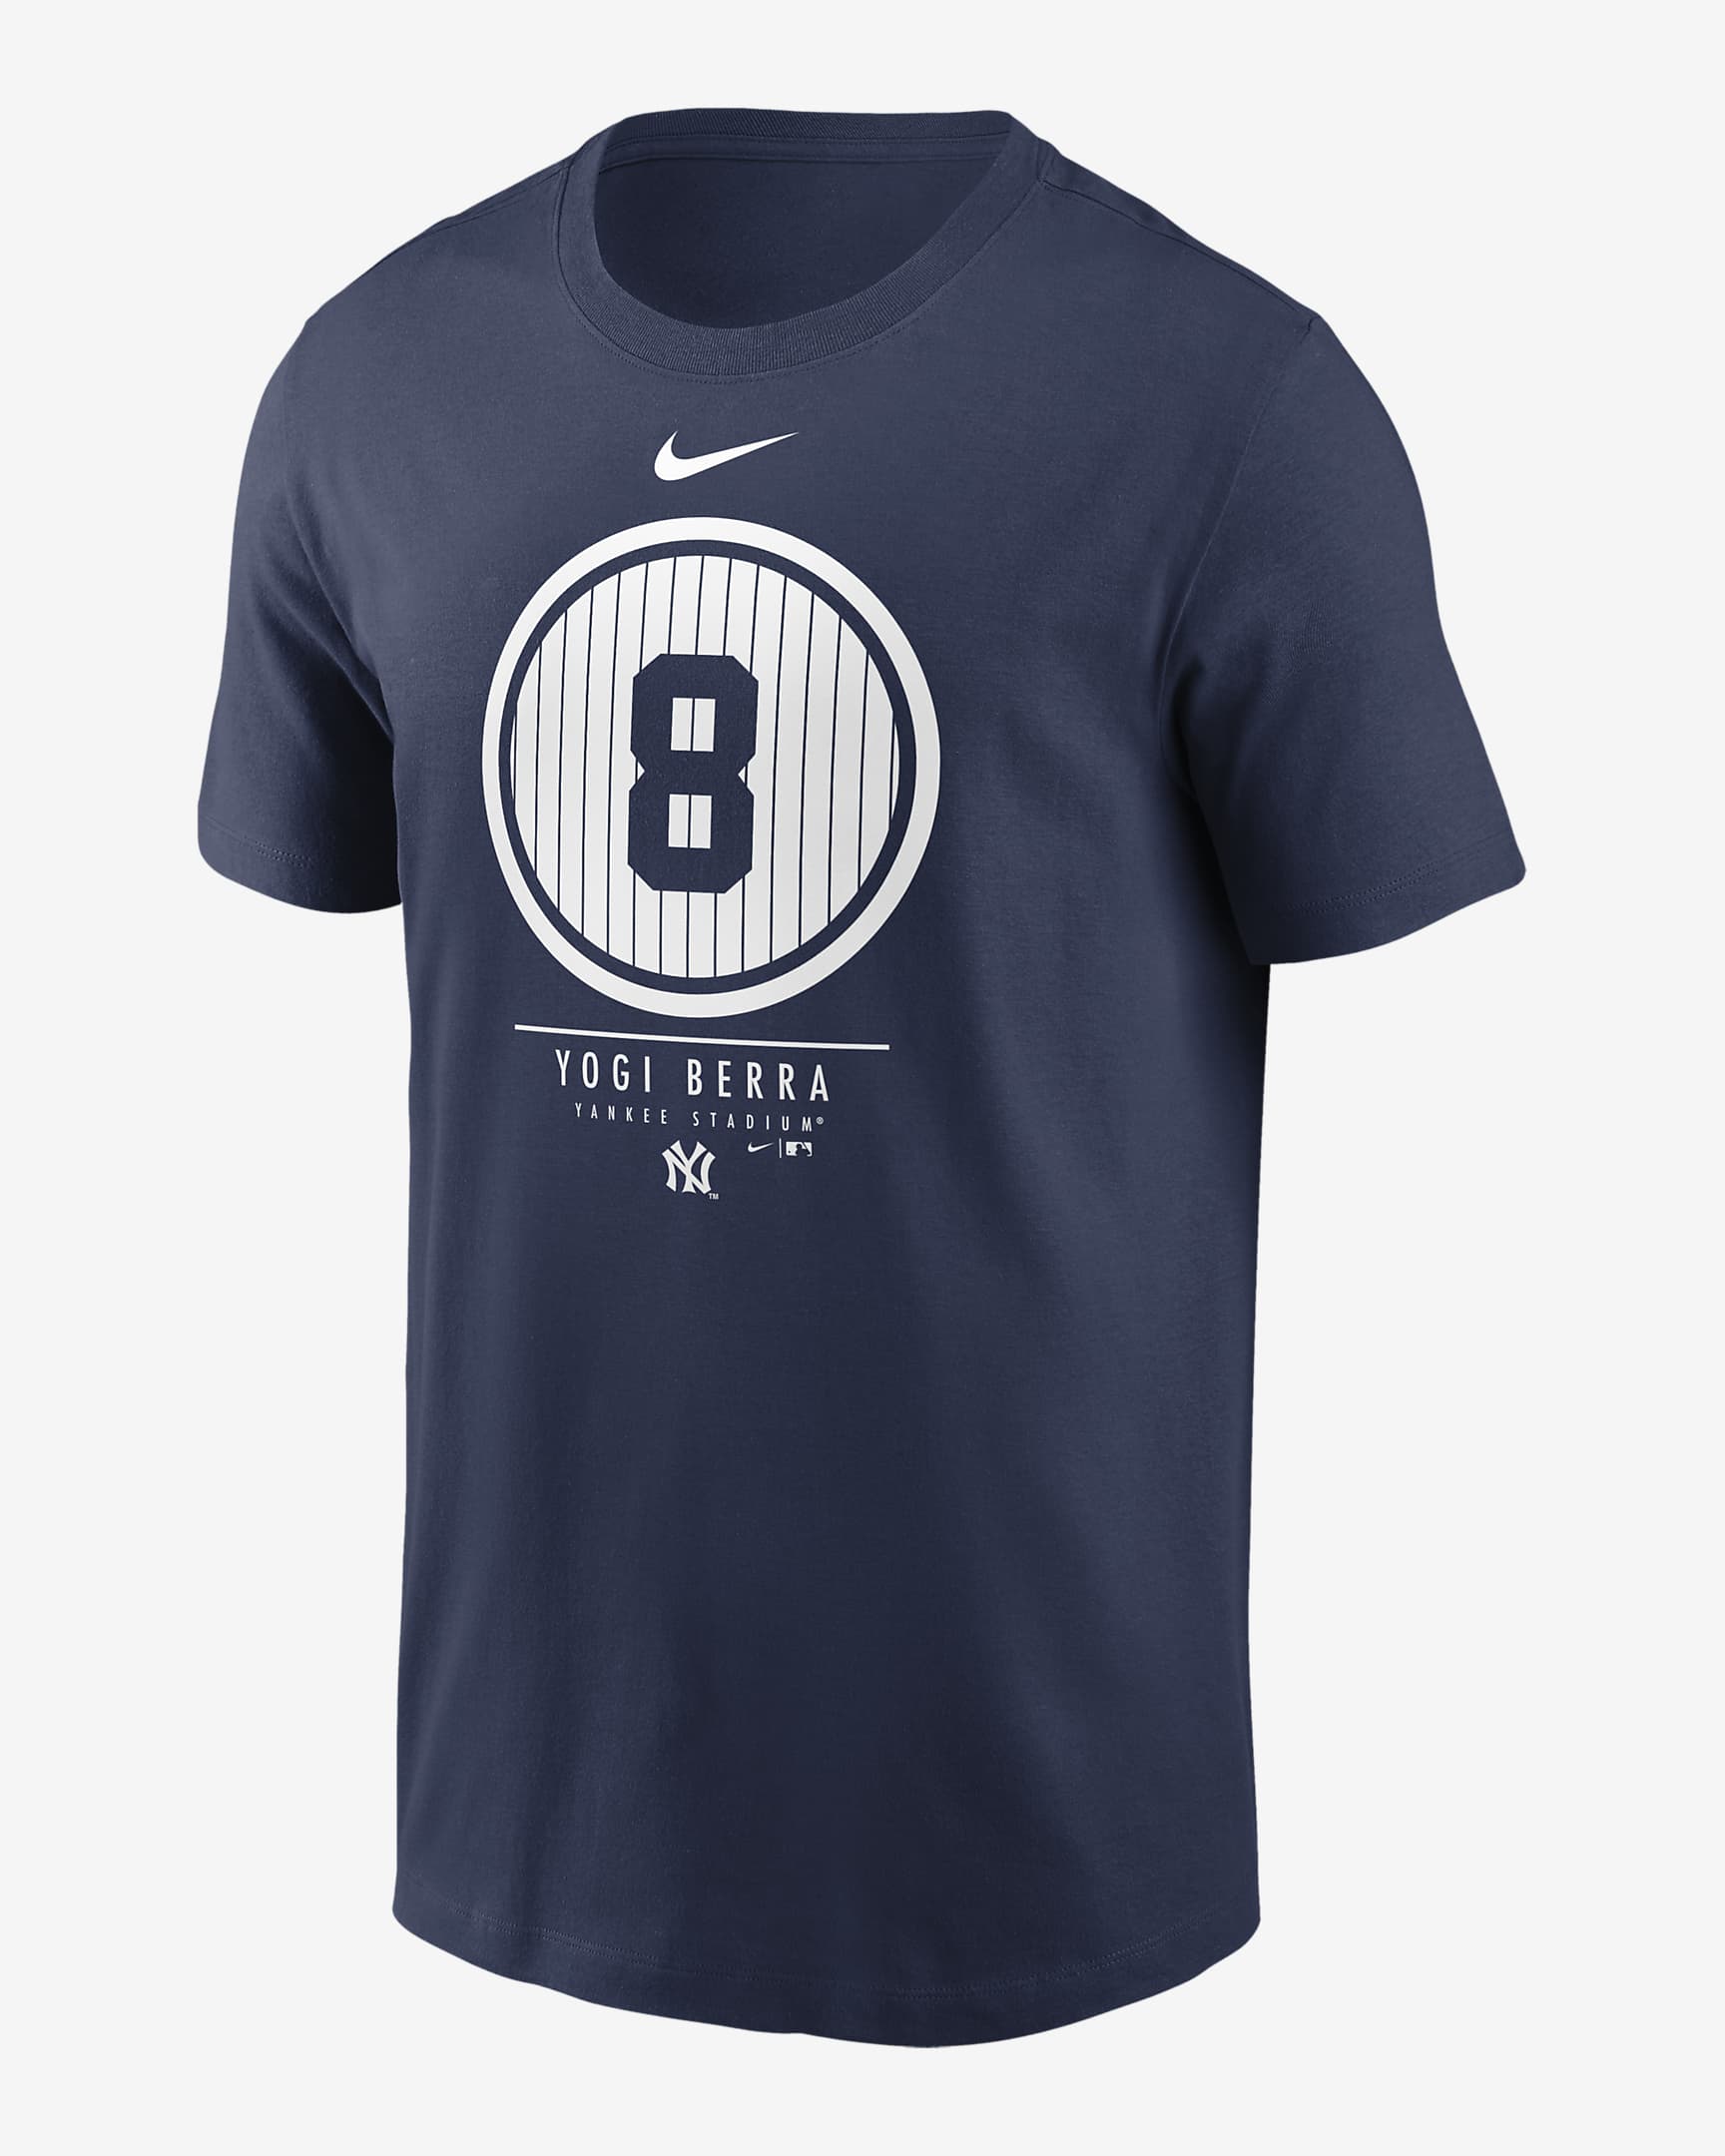 Playera para hombre MLB New York Yankees (Yogi Berra). Nike.com